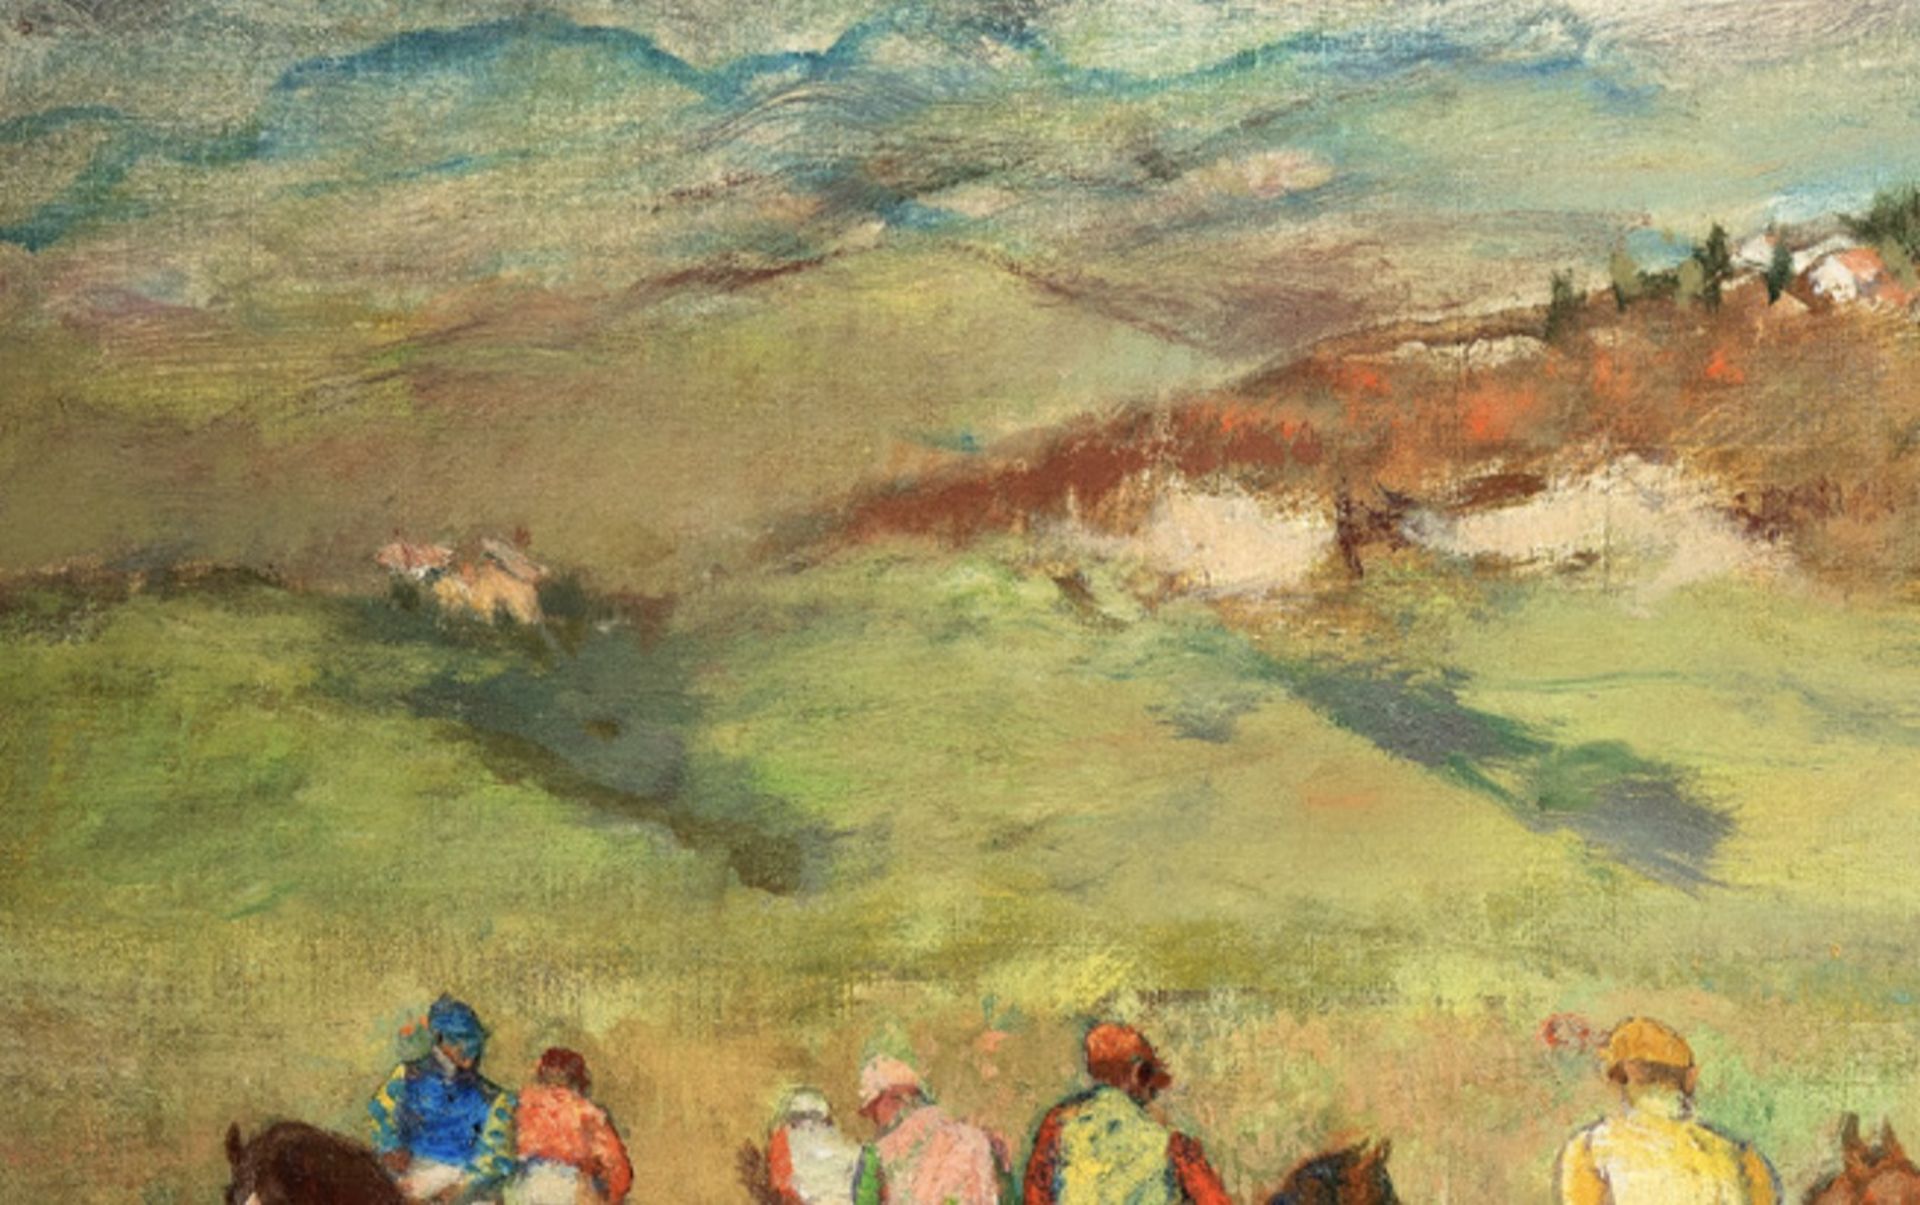 Edgar Degas "Jockeys on Horseback, Distant Hills" Wallpaper - Image 5 of 6